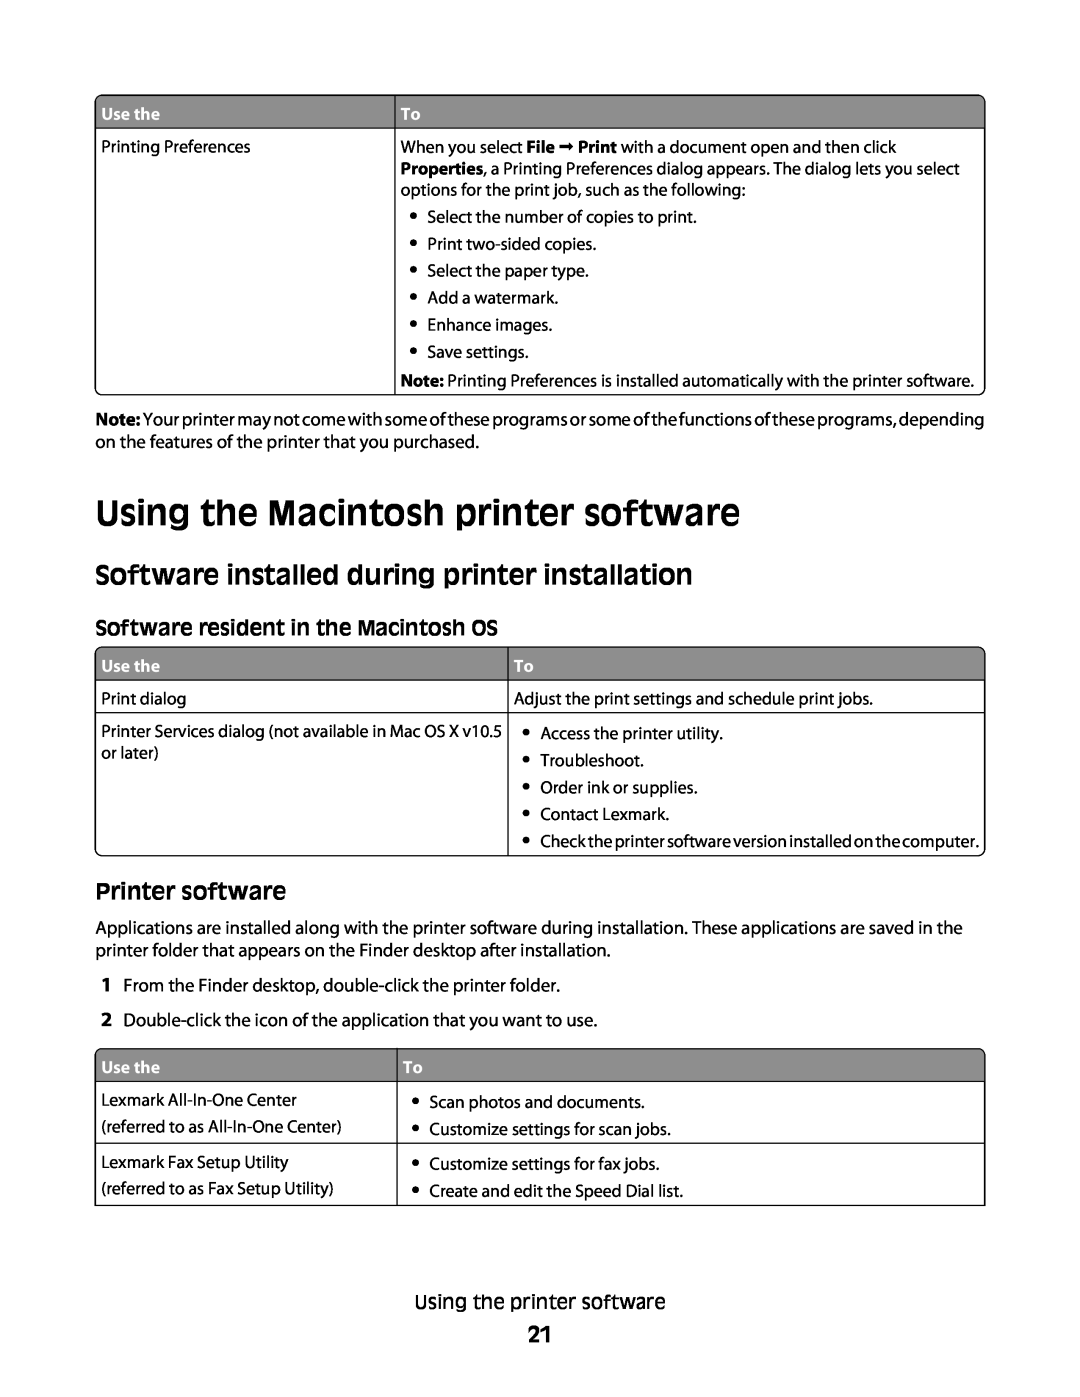 Lexmark S500, 30E, 301 manual Using the Macintosh printer software, Printer software, Software resident in the Macintosh OS 